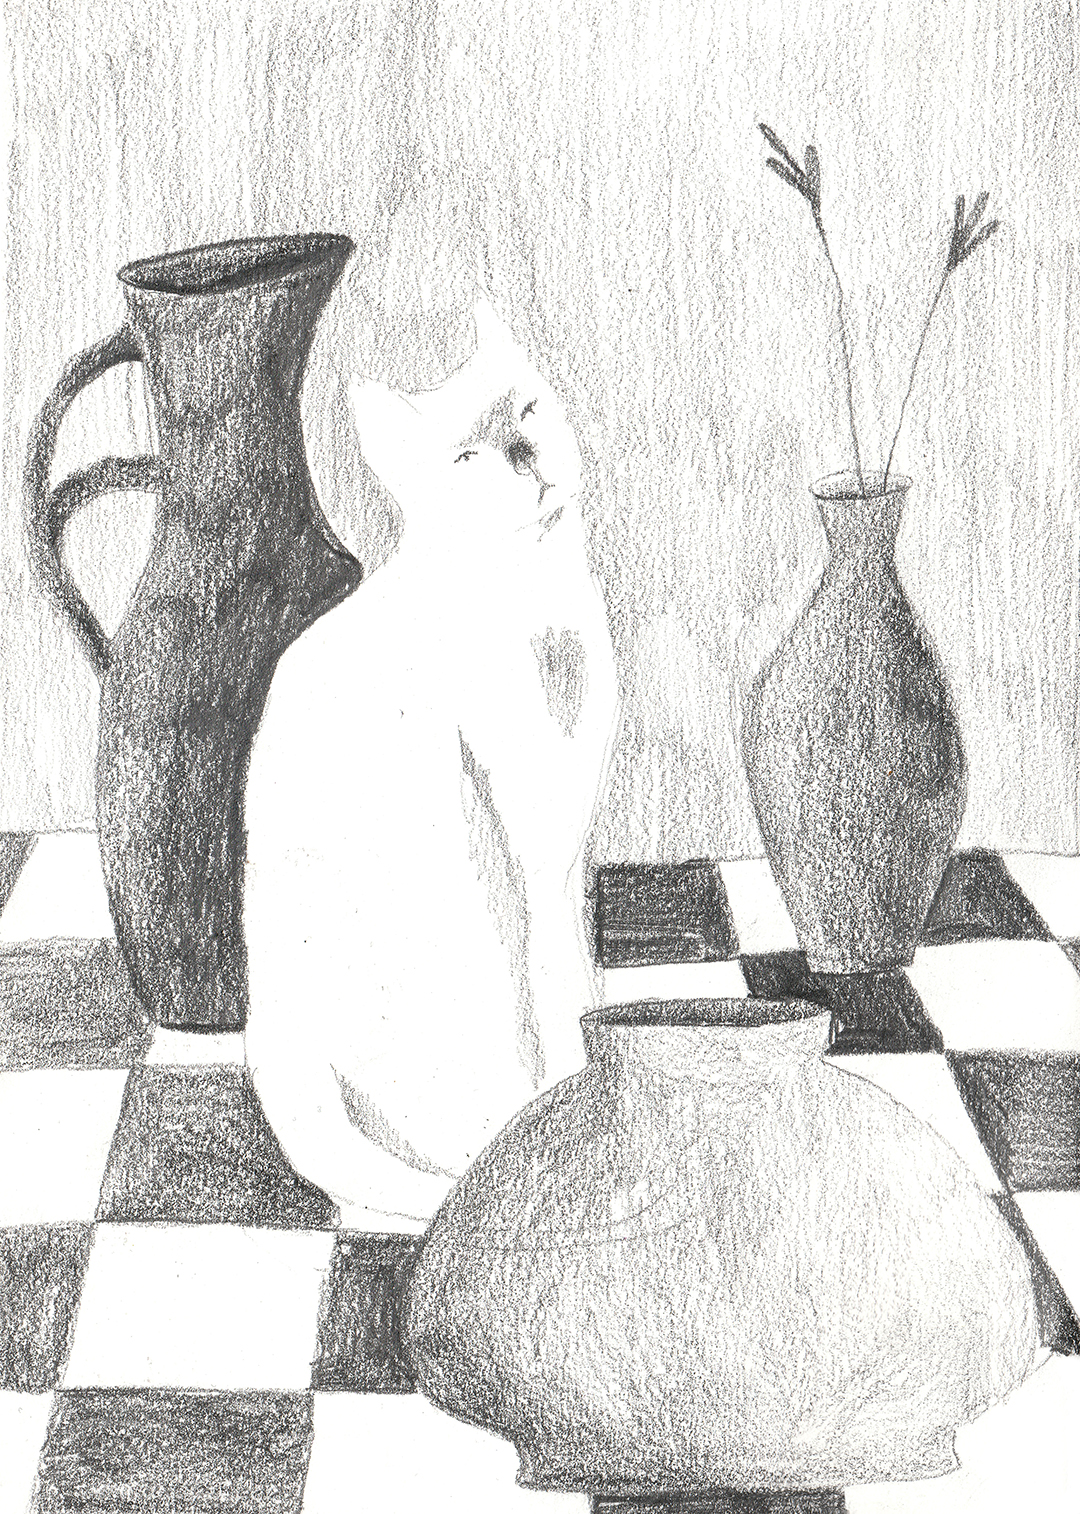 © Deniz Isikli – Cats and Vases